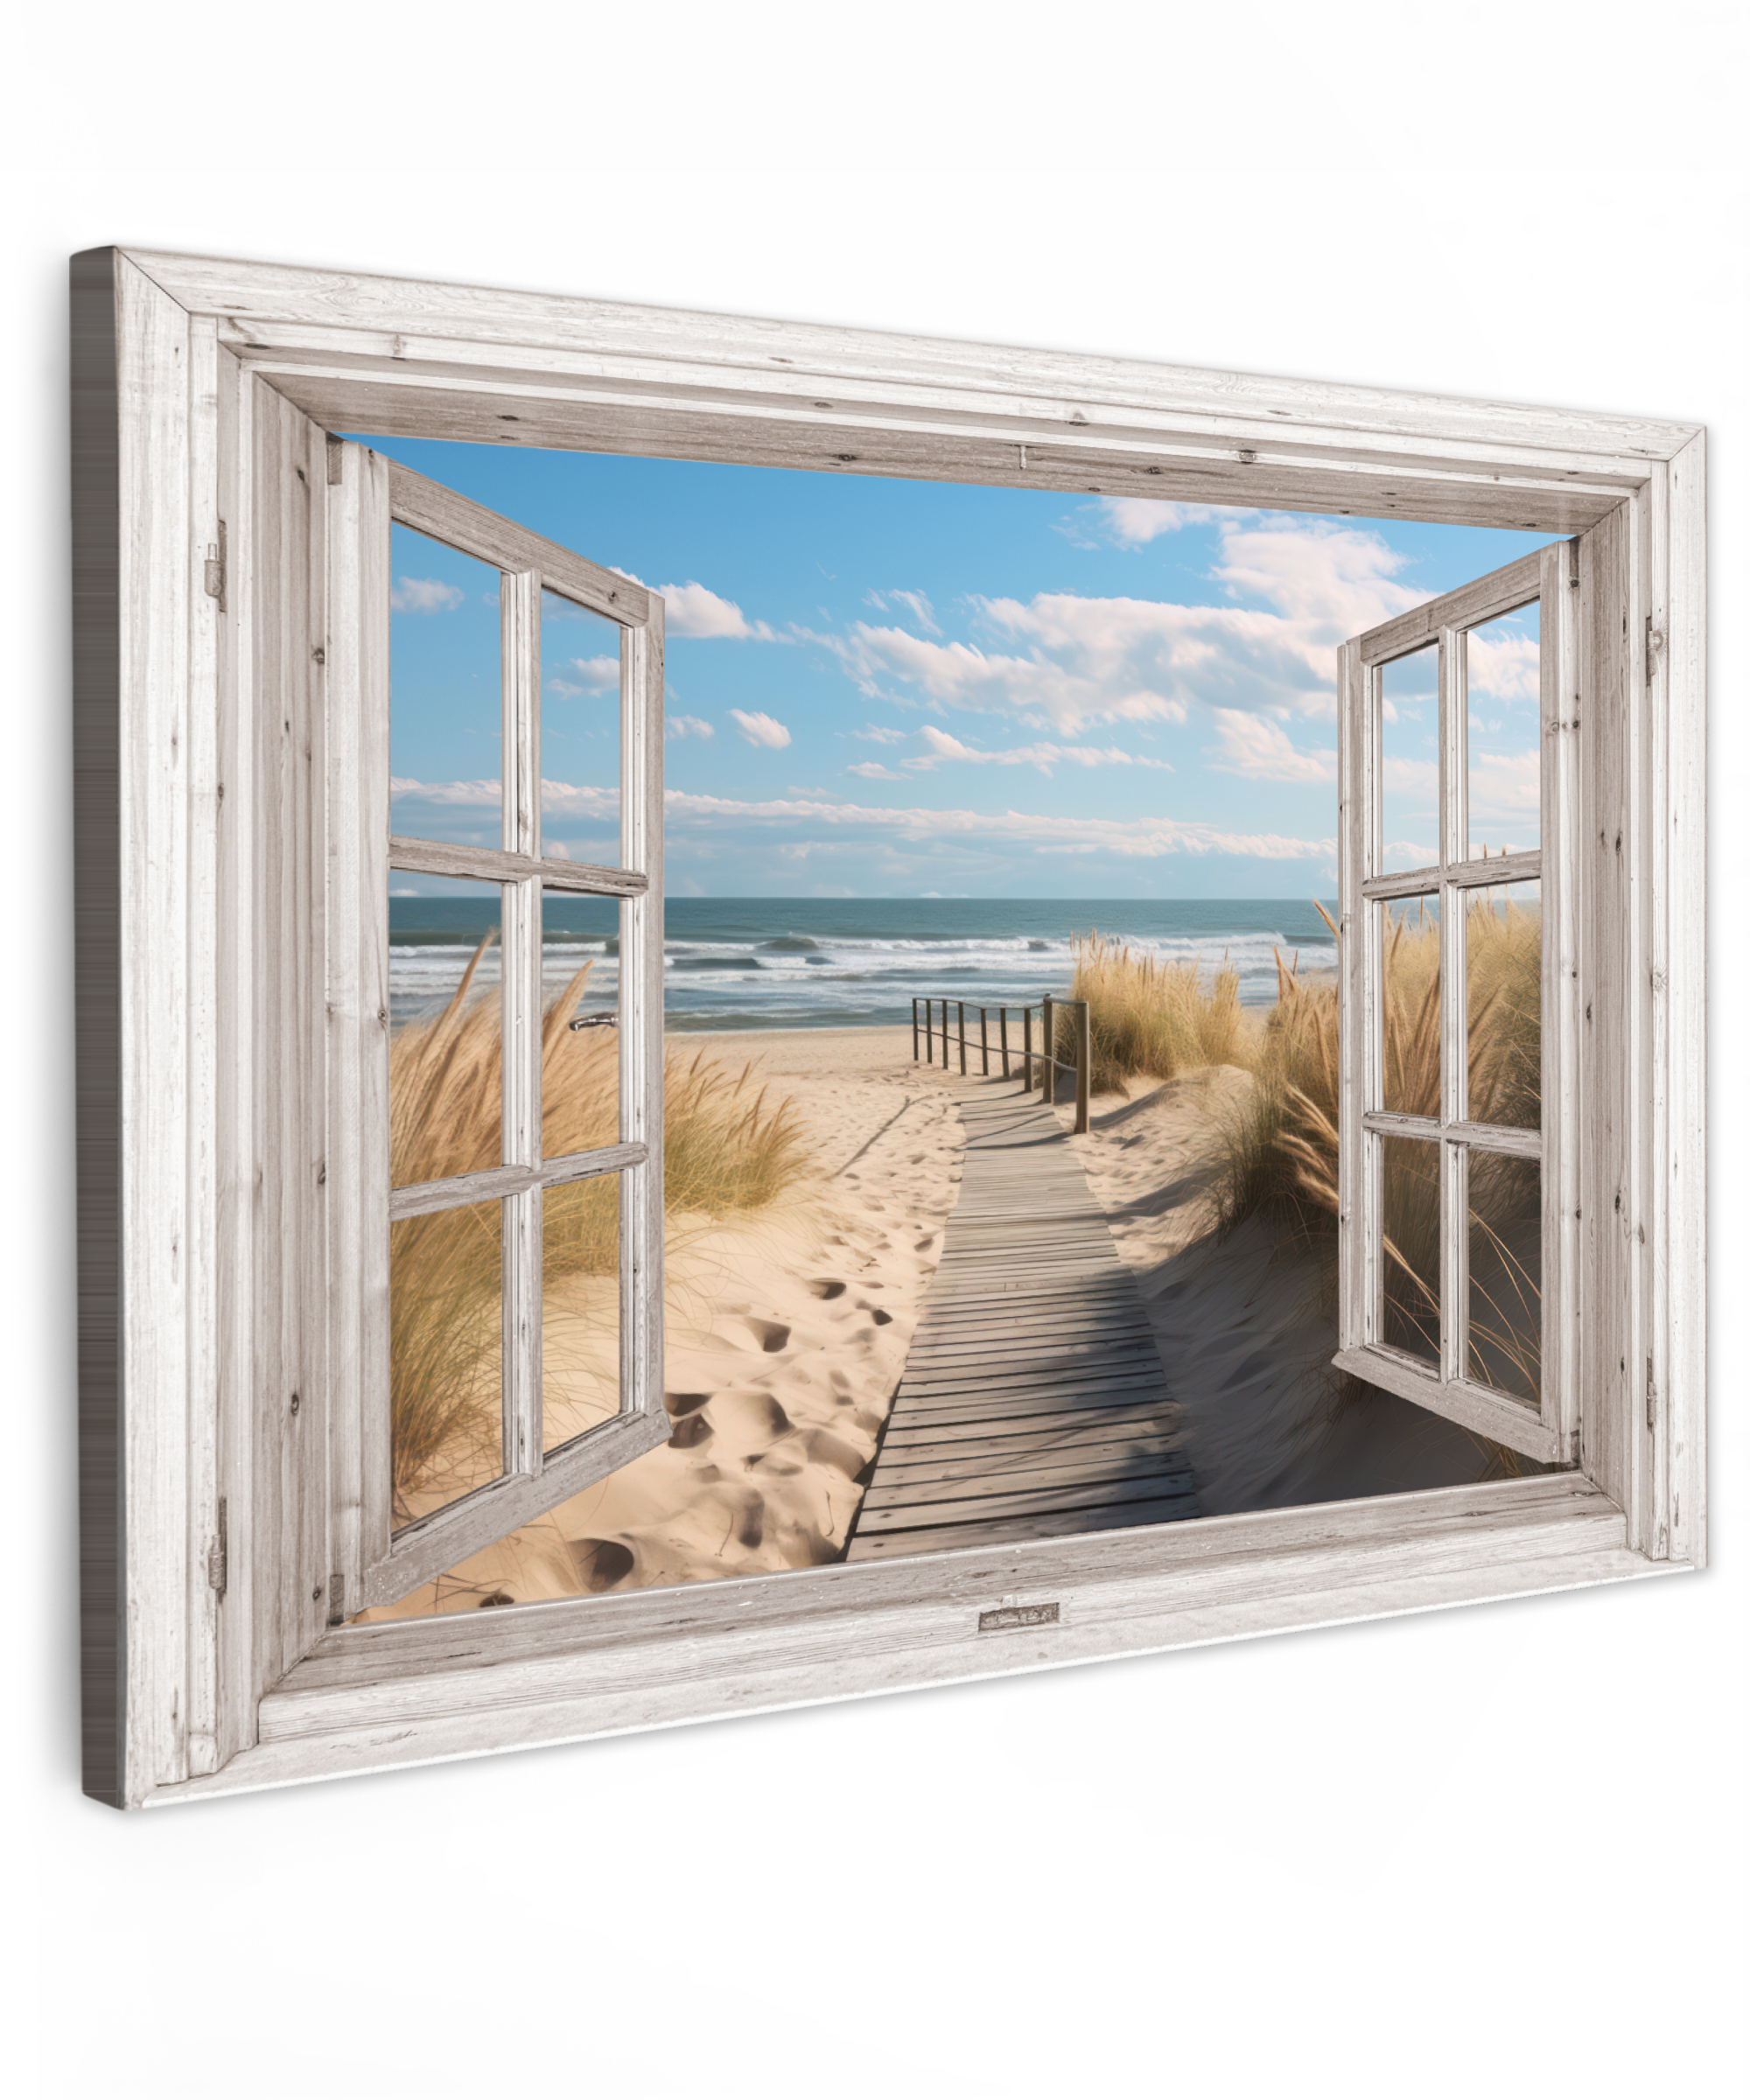 Leinwandbild - Fenster - Meer - Küste - Natur - Durchblick - Strand - Wattenmeer